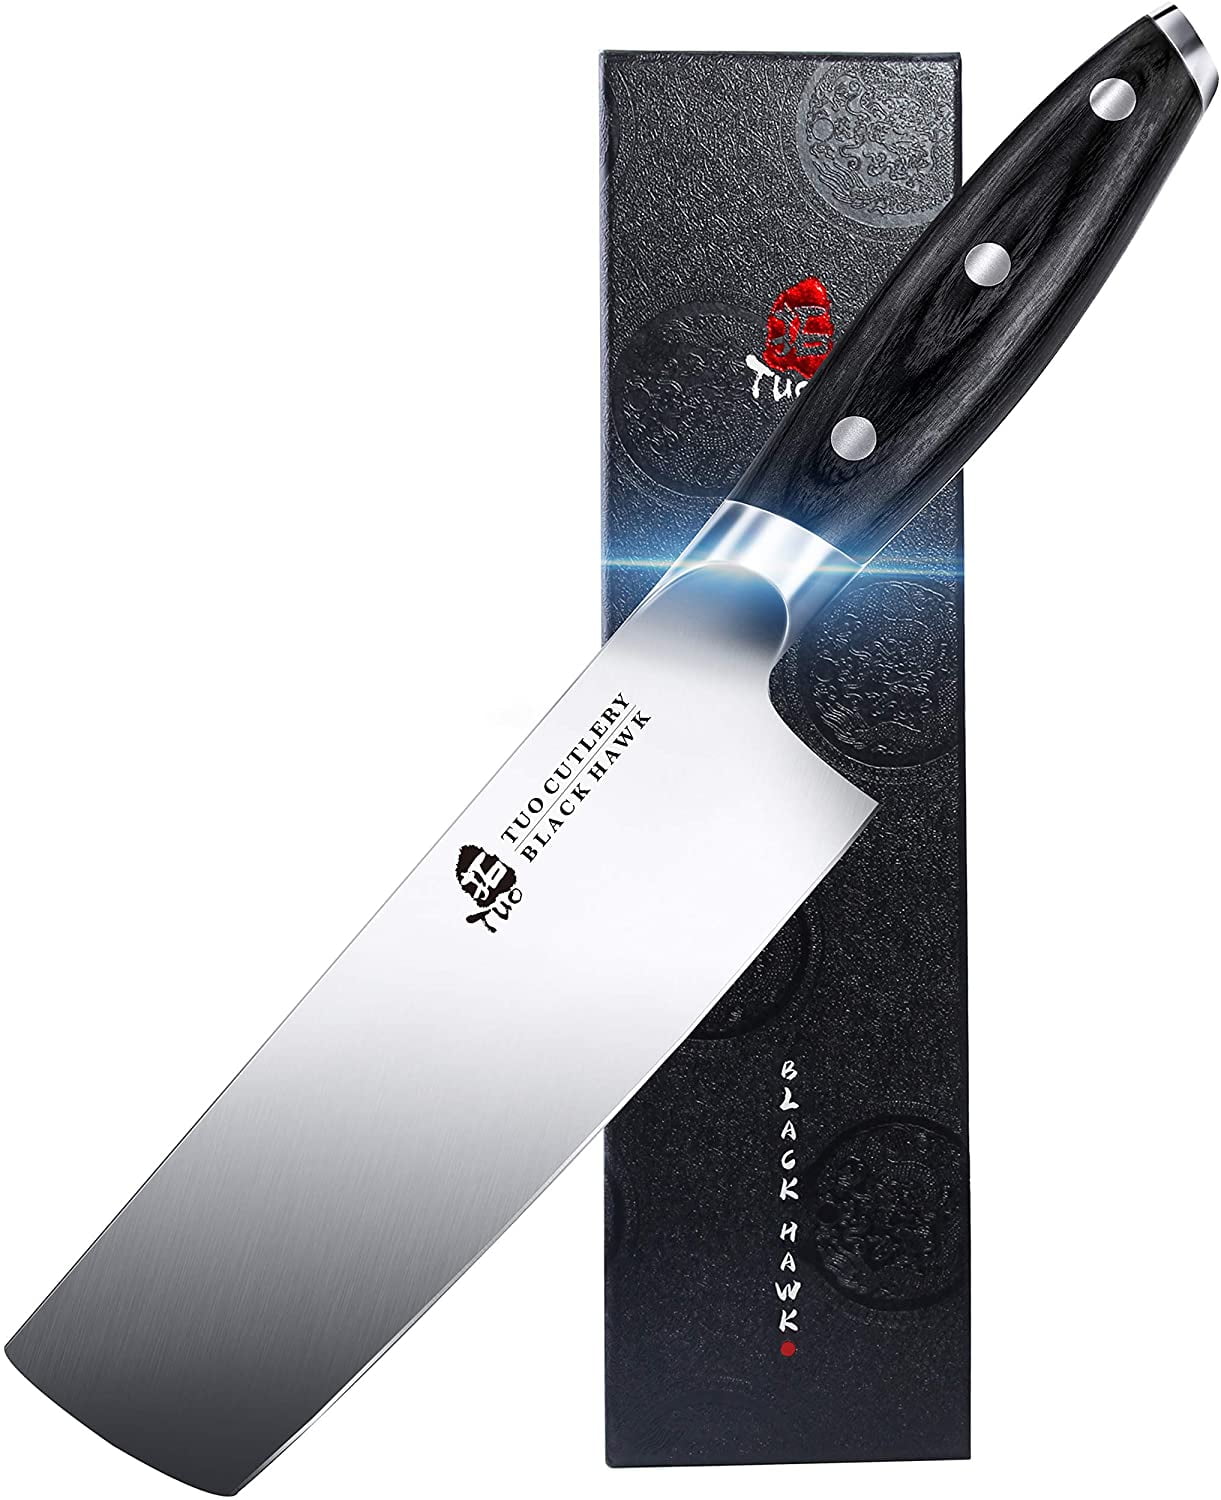 Nakiri Chef Knife 6.5 Inch - Damascus Japanese VG10 Super Steel 67 Lay –